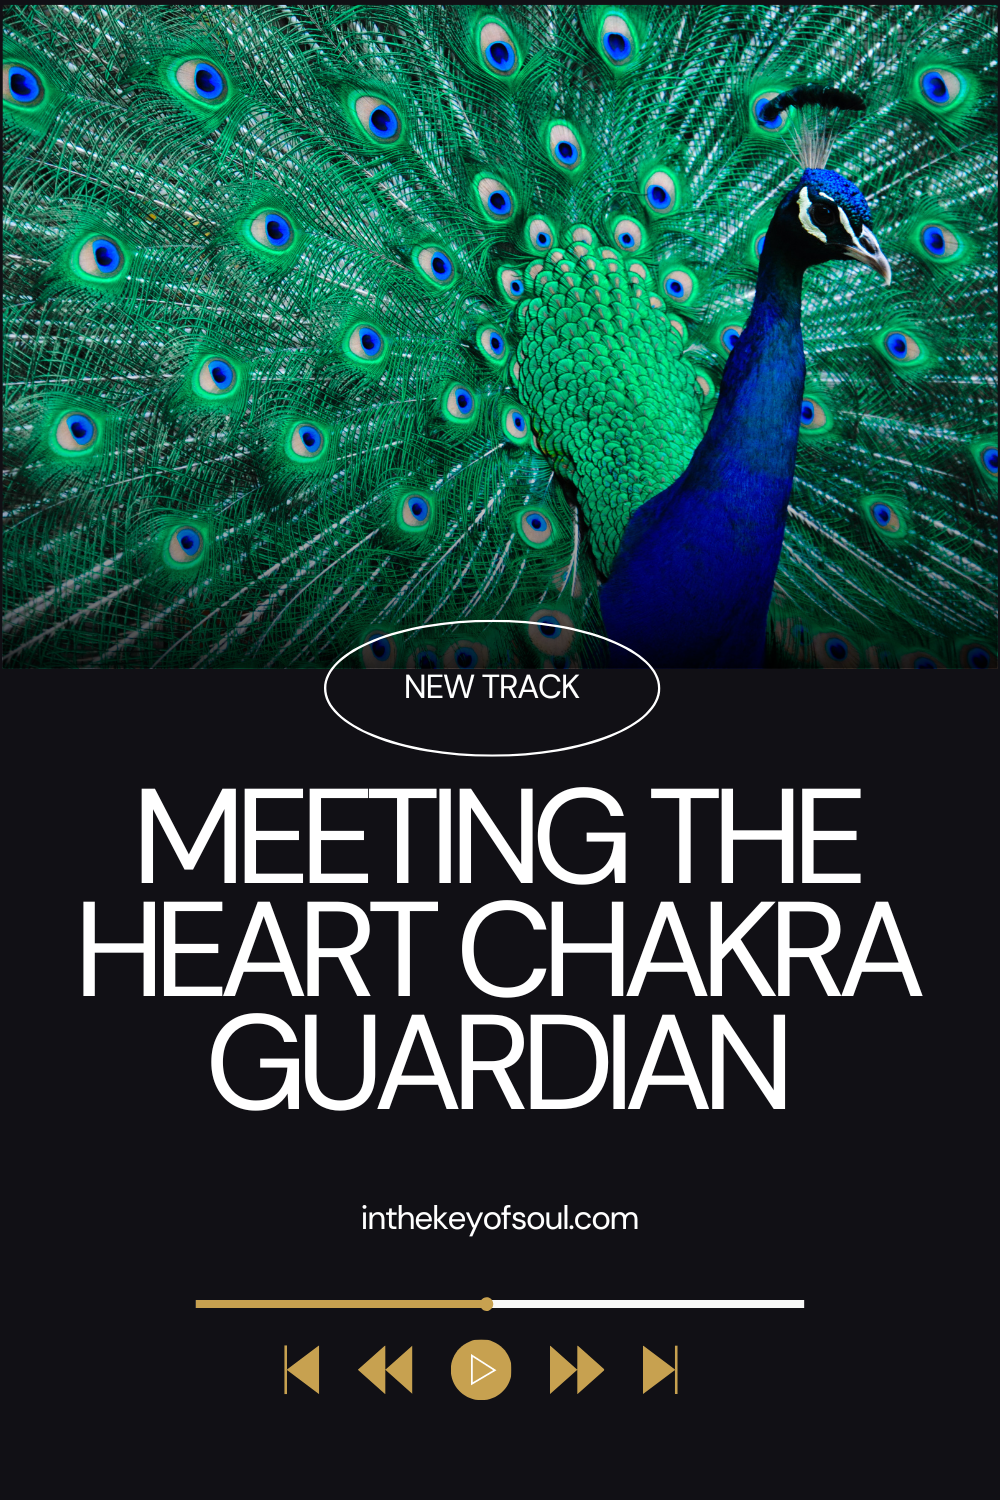 MEETING THE HEART CHAKRA GUARDIAN